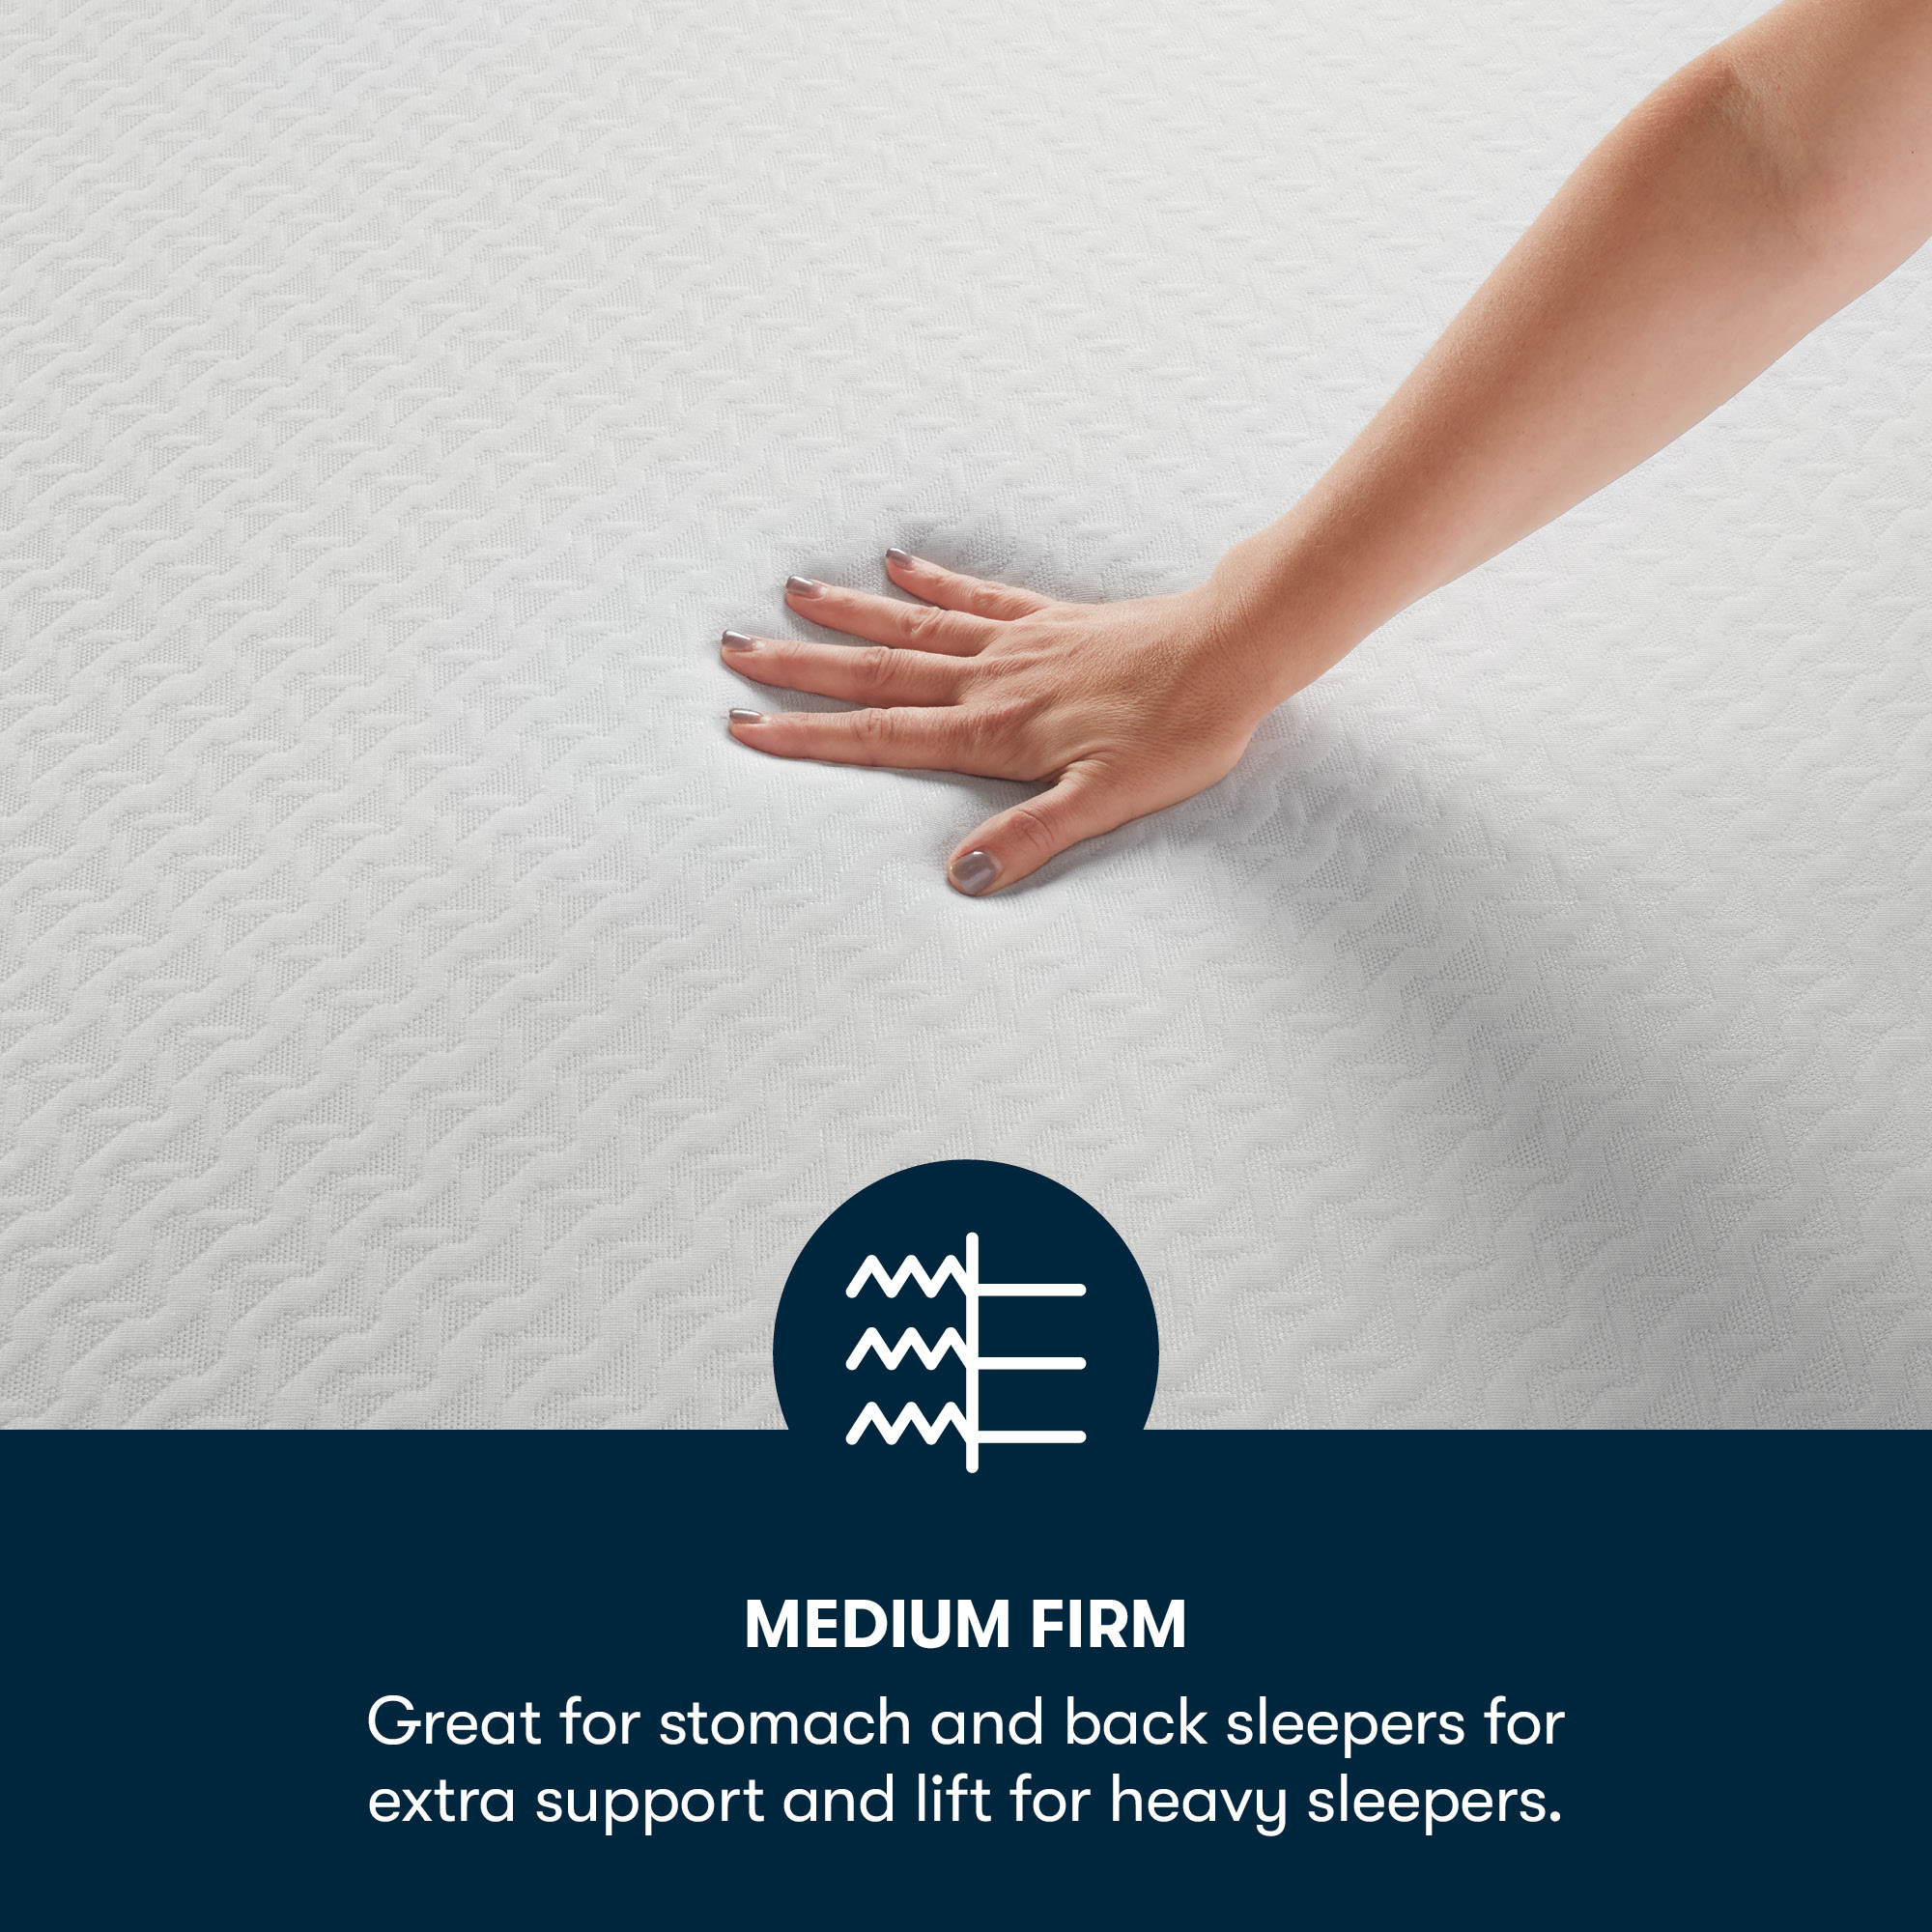 Serta Sheer Slumber 8" Medium Firm Memory Foam Mattress -Full Mattress-in-a-Box - image 4 of 13